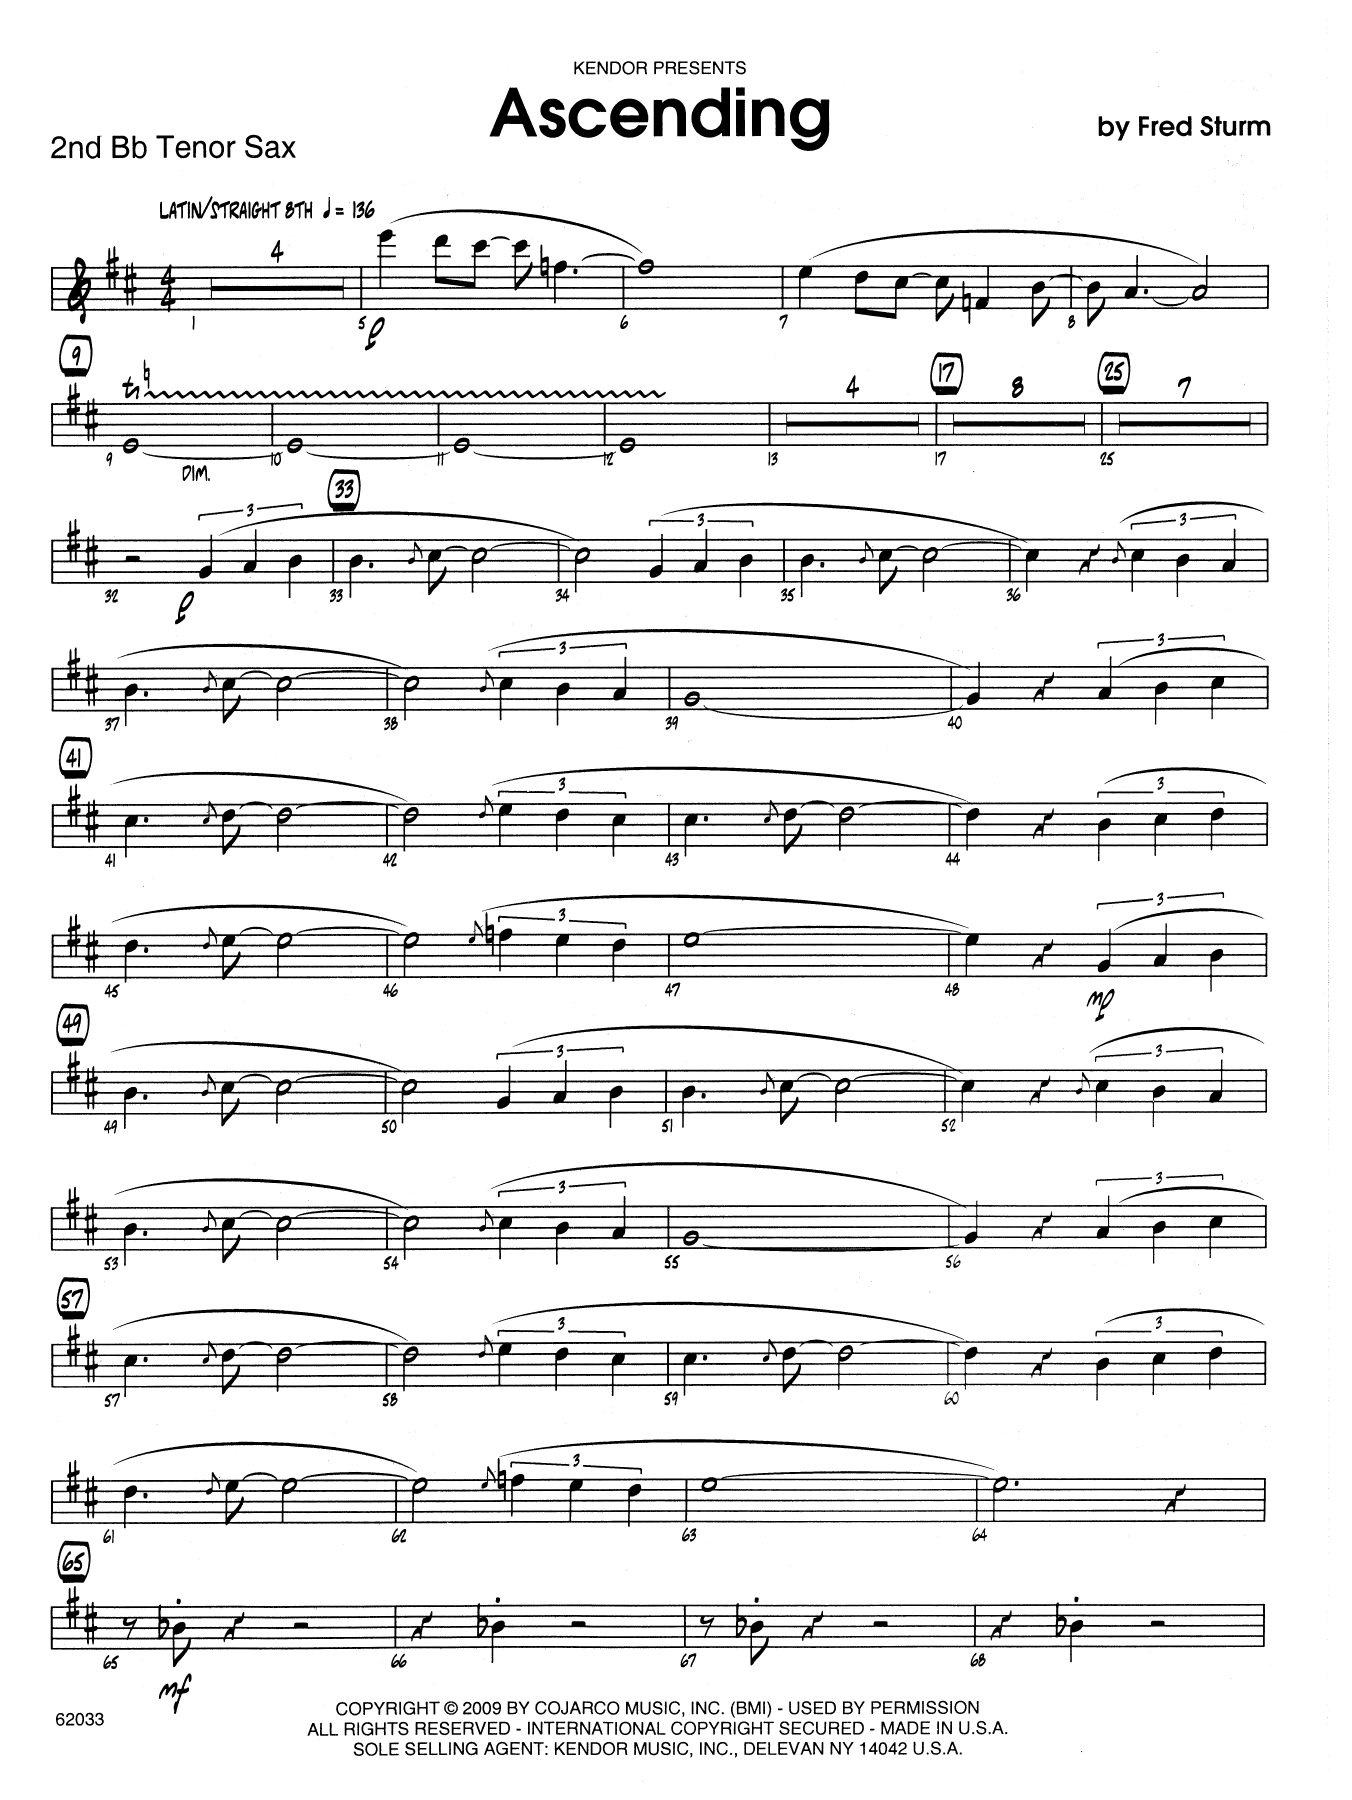 Download Fred Sturm Ascending - 2nd Bb Tenor Saxophone Sheet Music